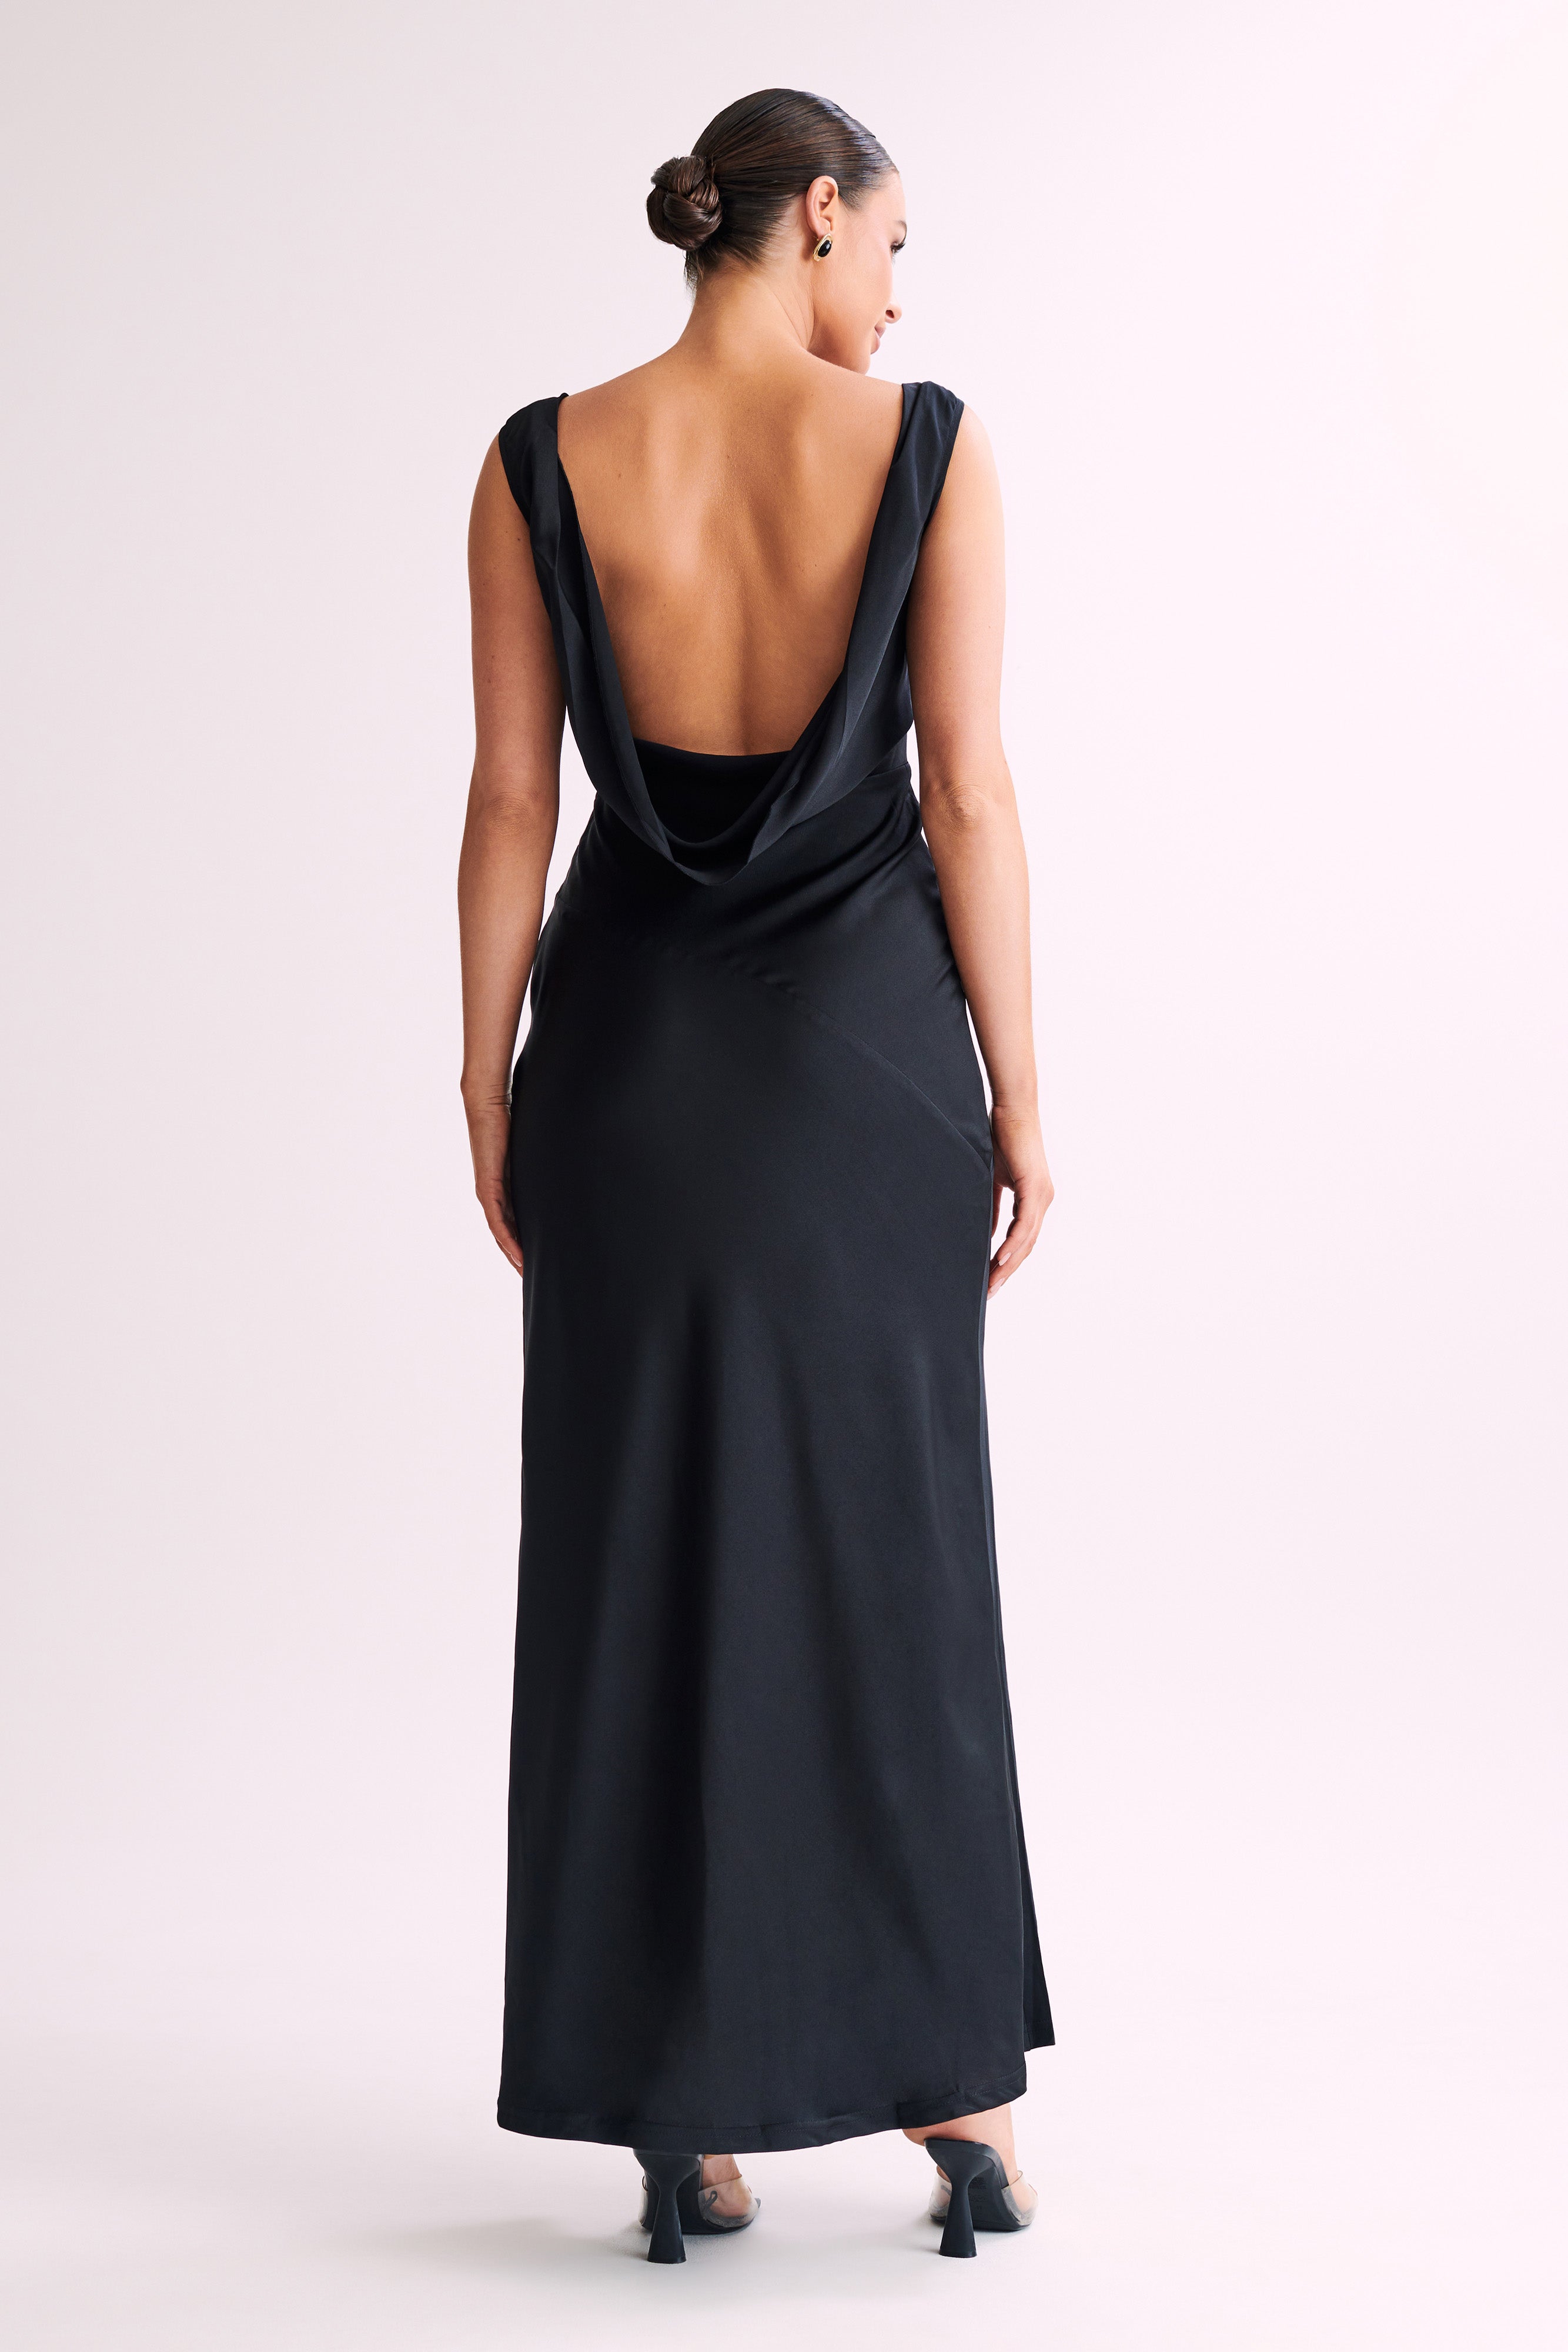 andmary Nadia check long dress Black-